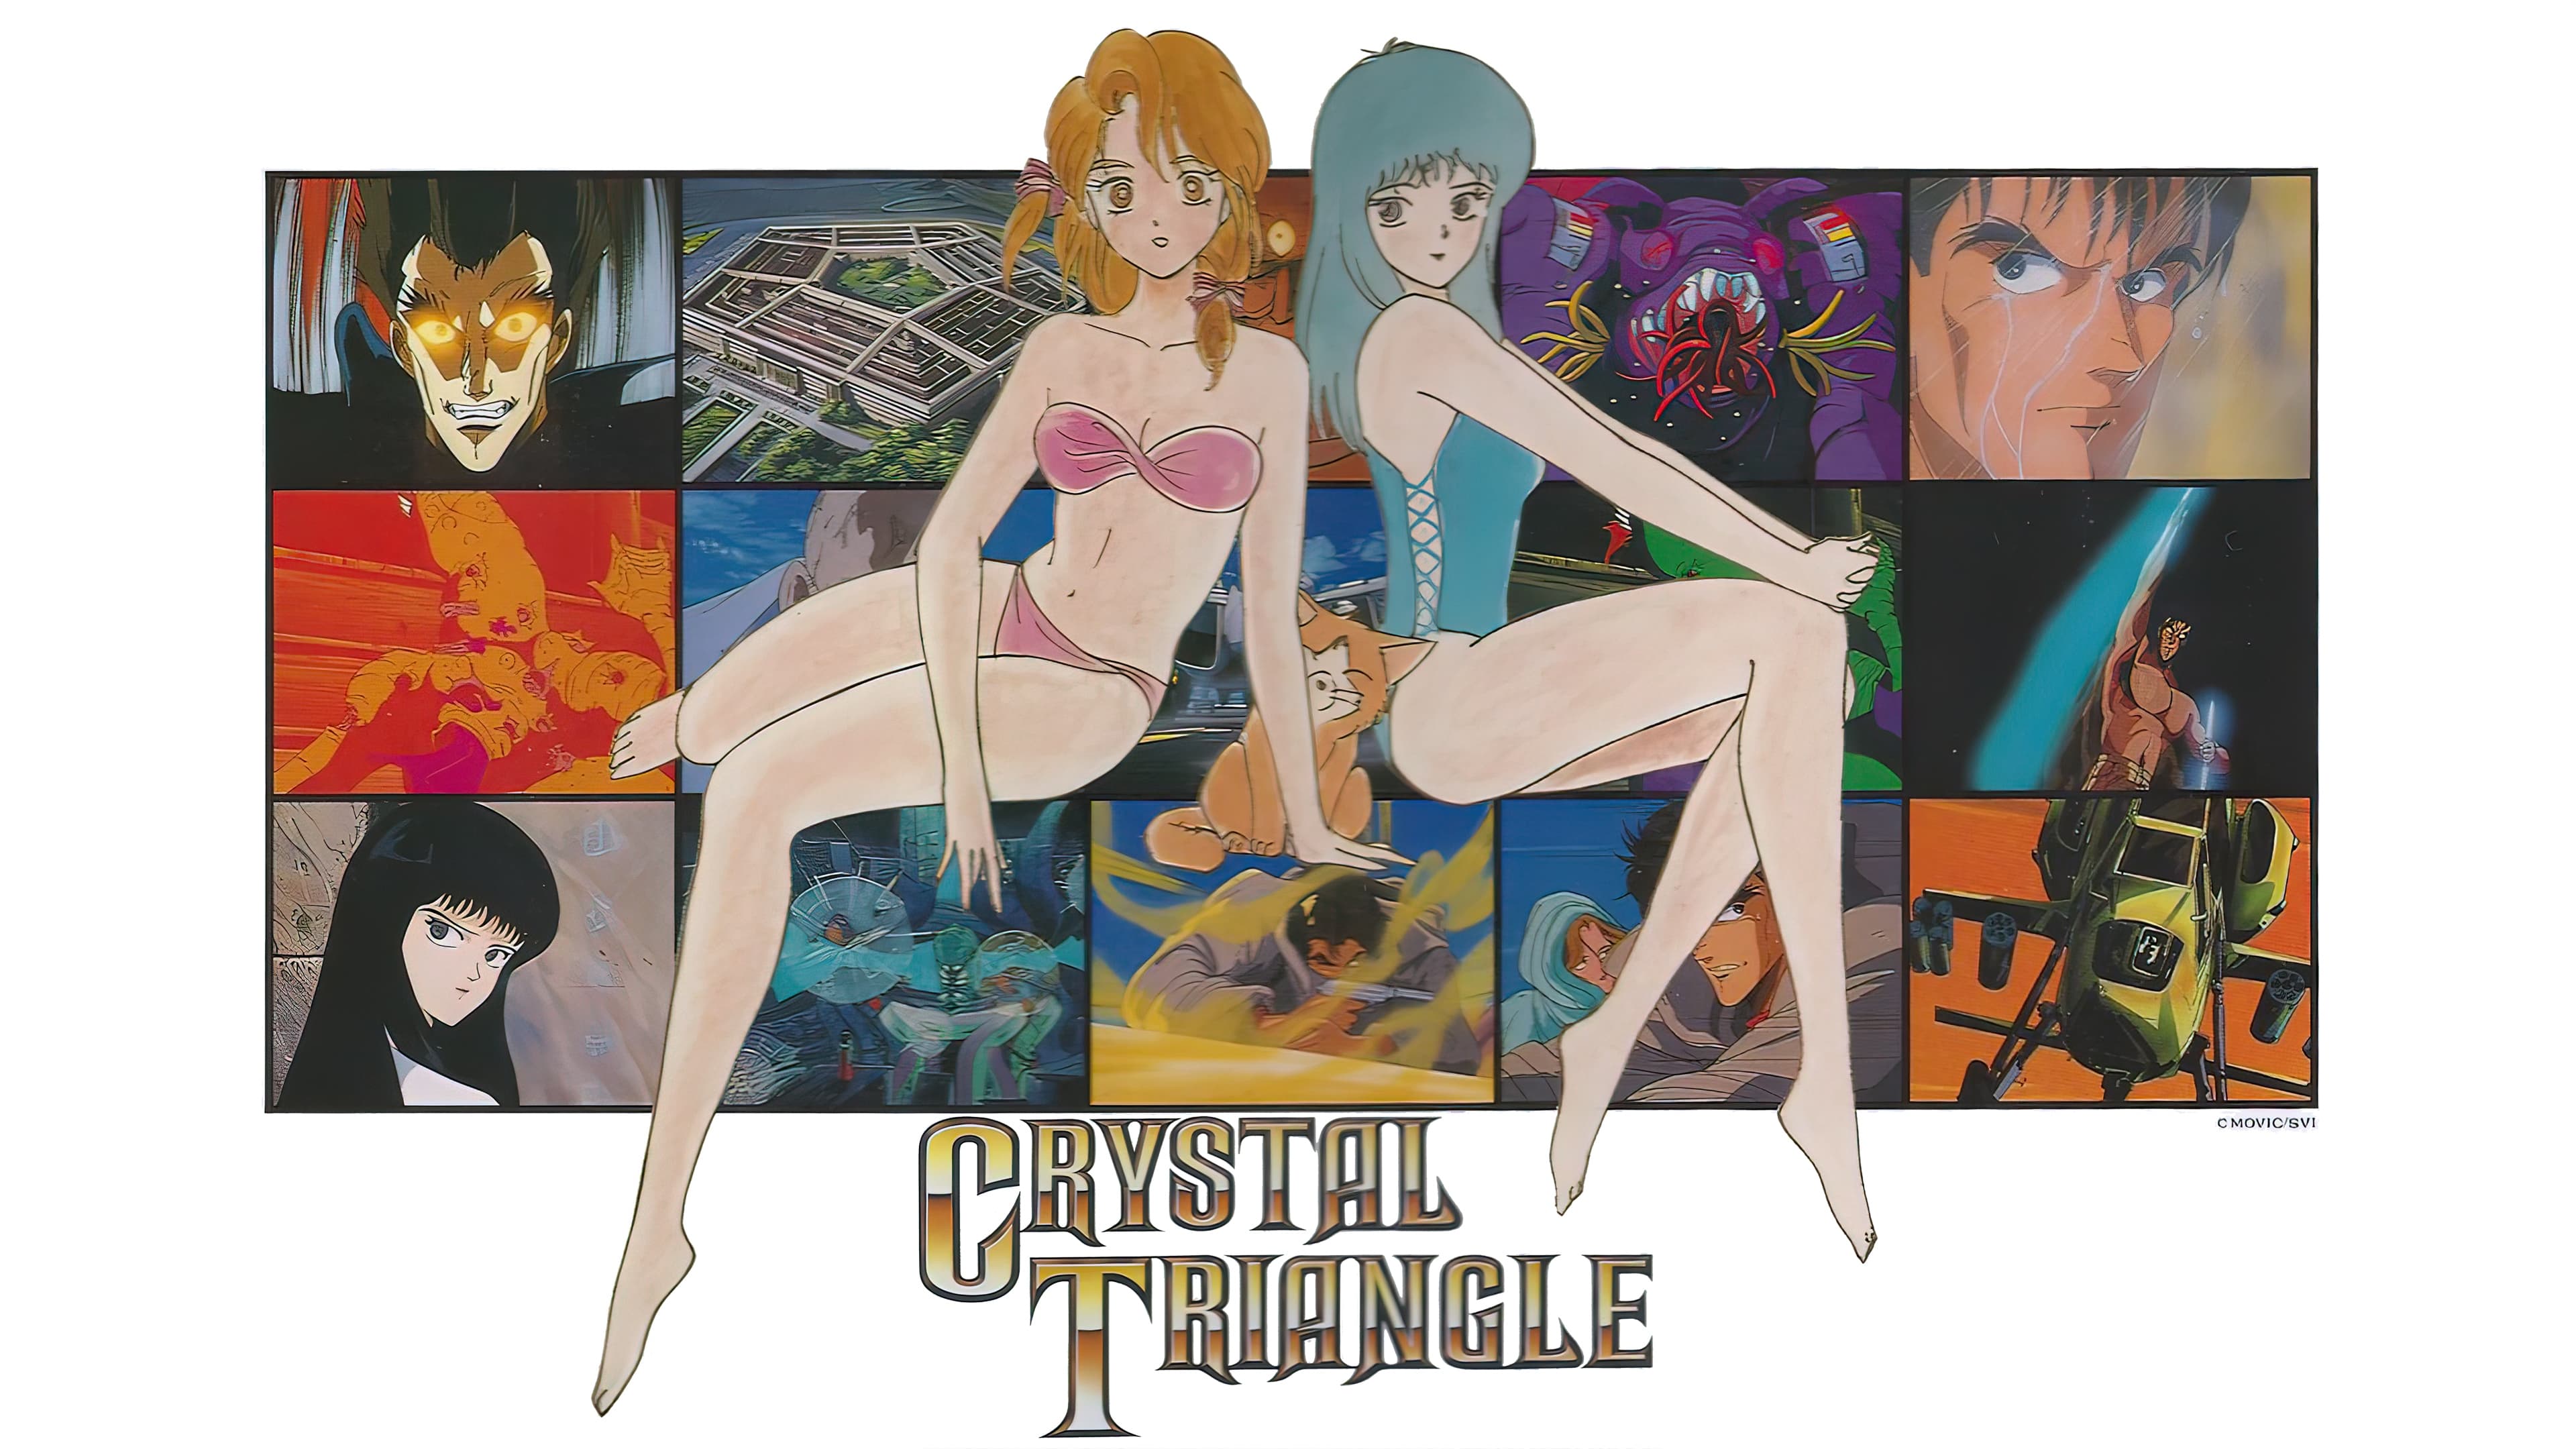 Cristal Triangle